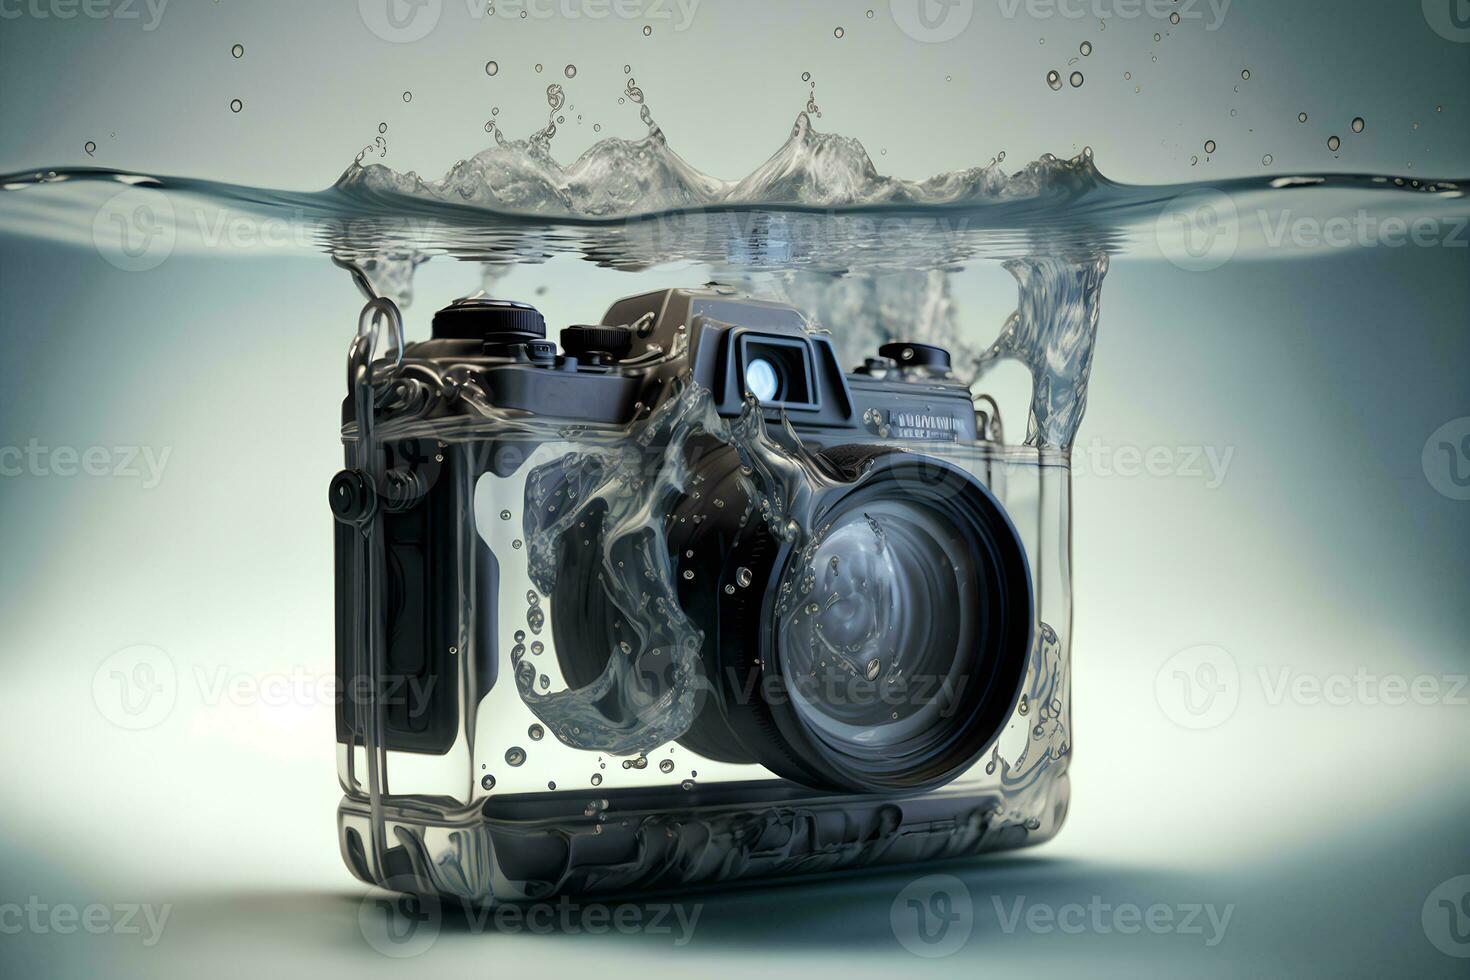 modern slr fotocamera vallend onder water met water spatten. neurale netwerk gegenereerd kunst foto